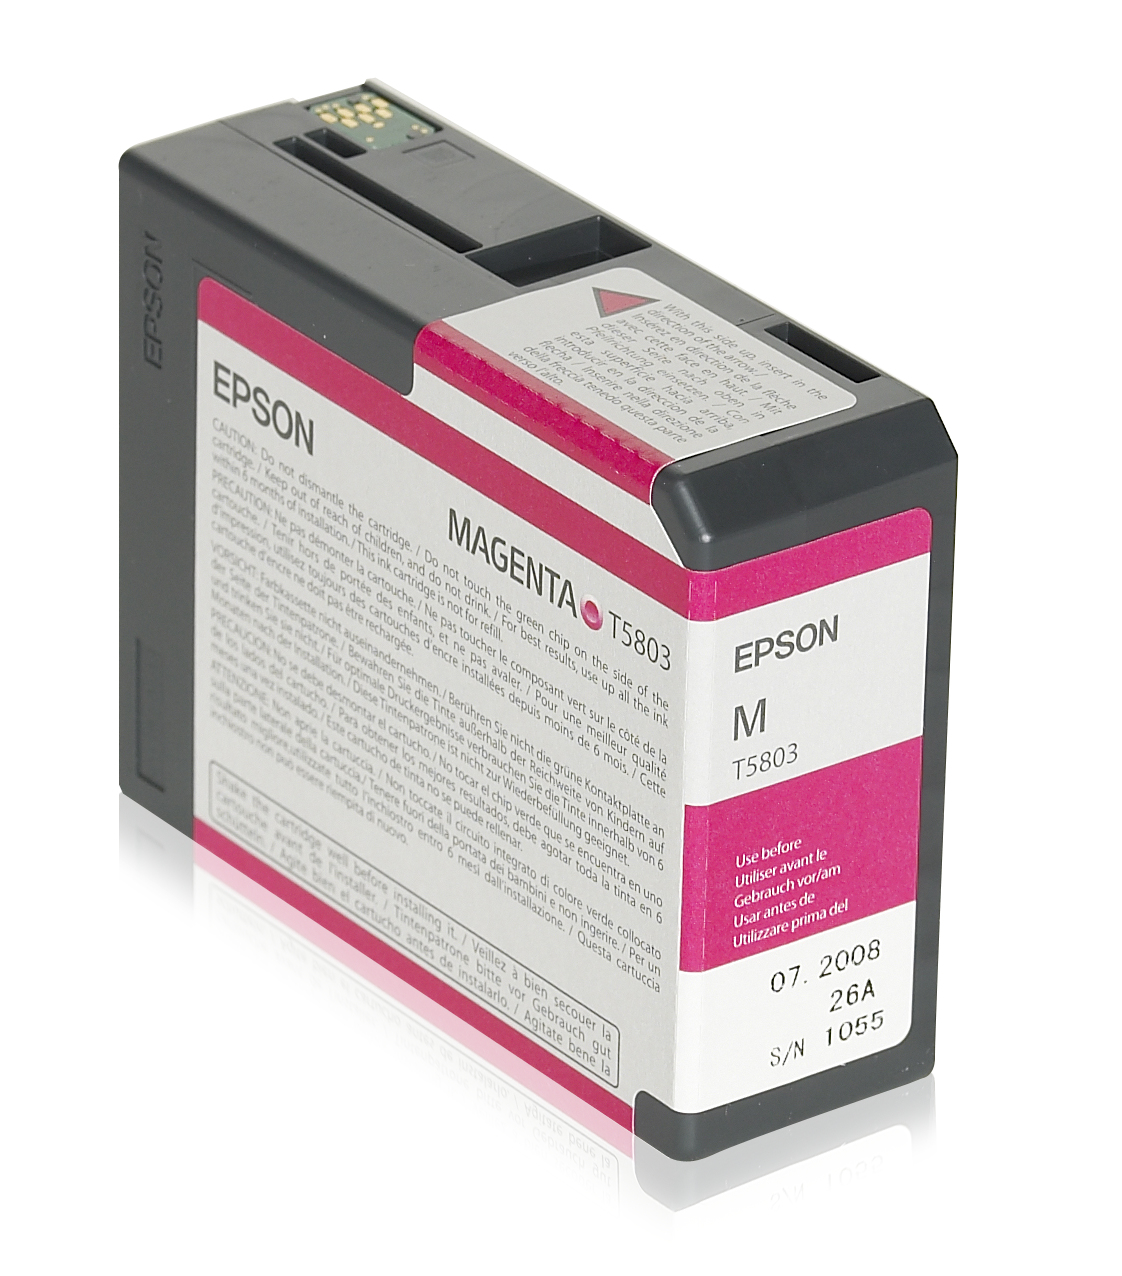 Epson C13T580300/T5803 Ink cartridge magenta 80ml for Epson Stylus Pro 3800